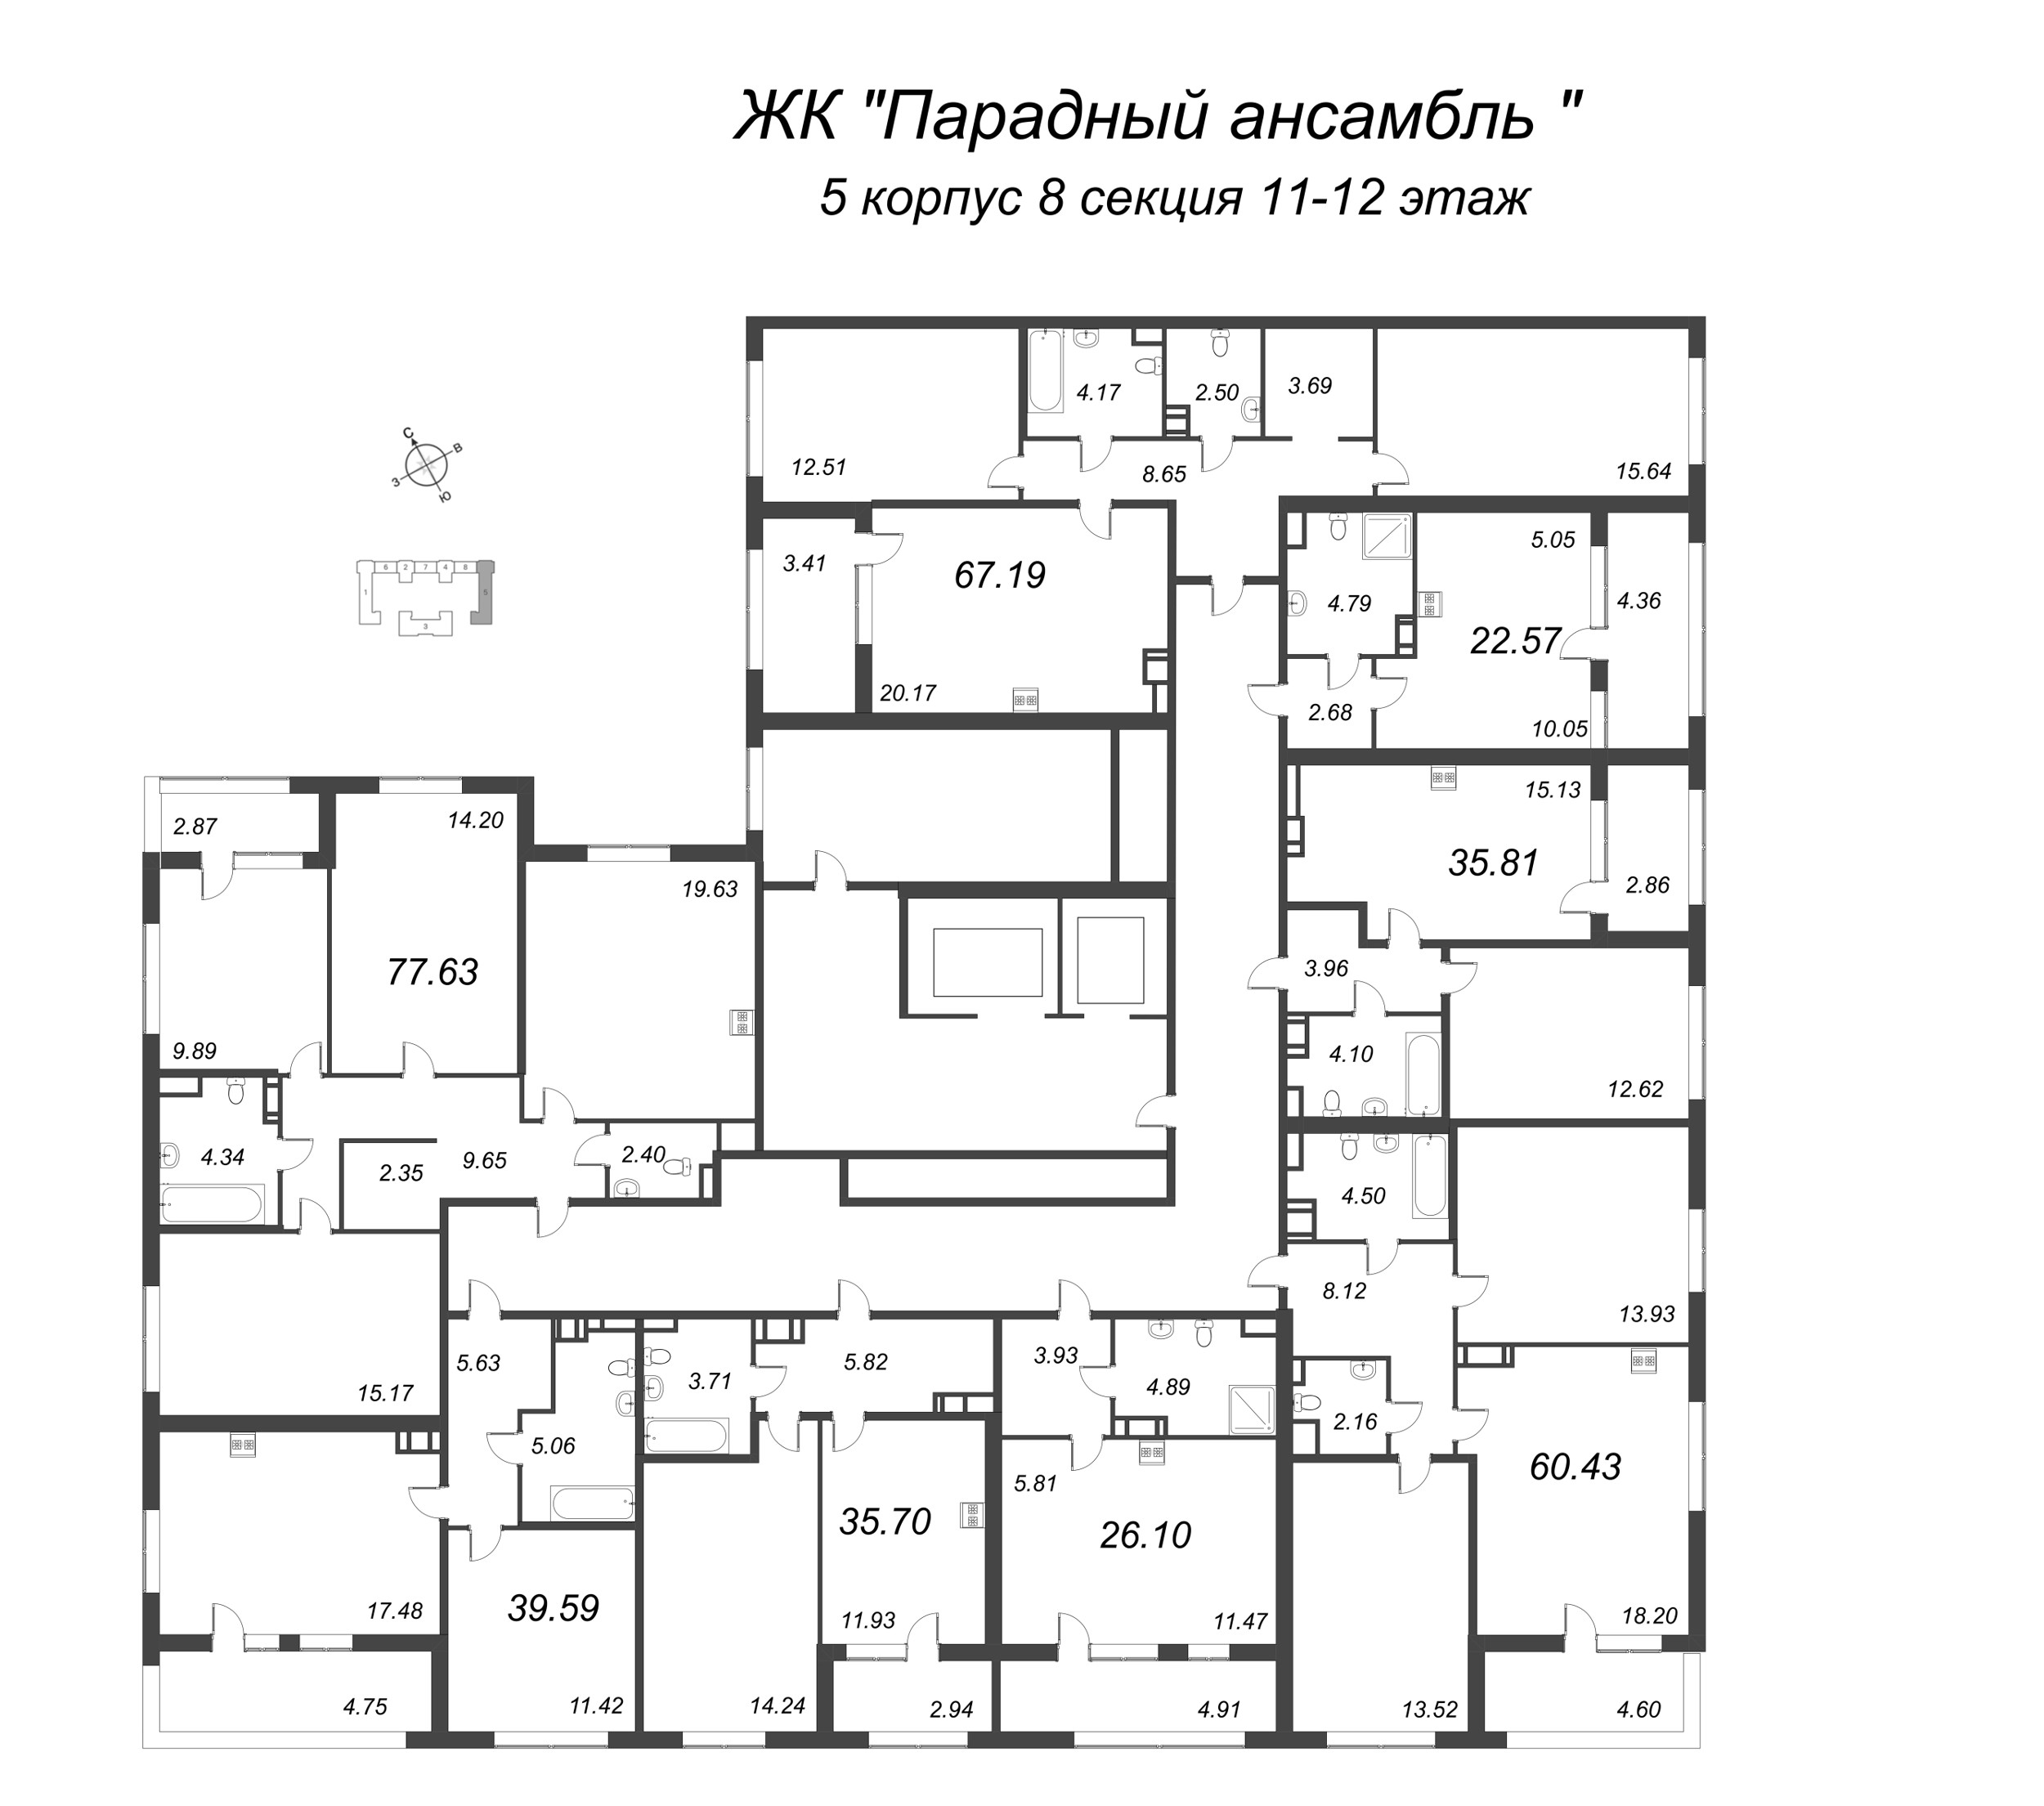 2-комнатная (Евро) квартира, 35.81 м² - планировка этажа